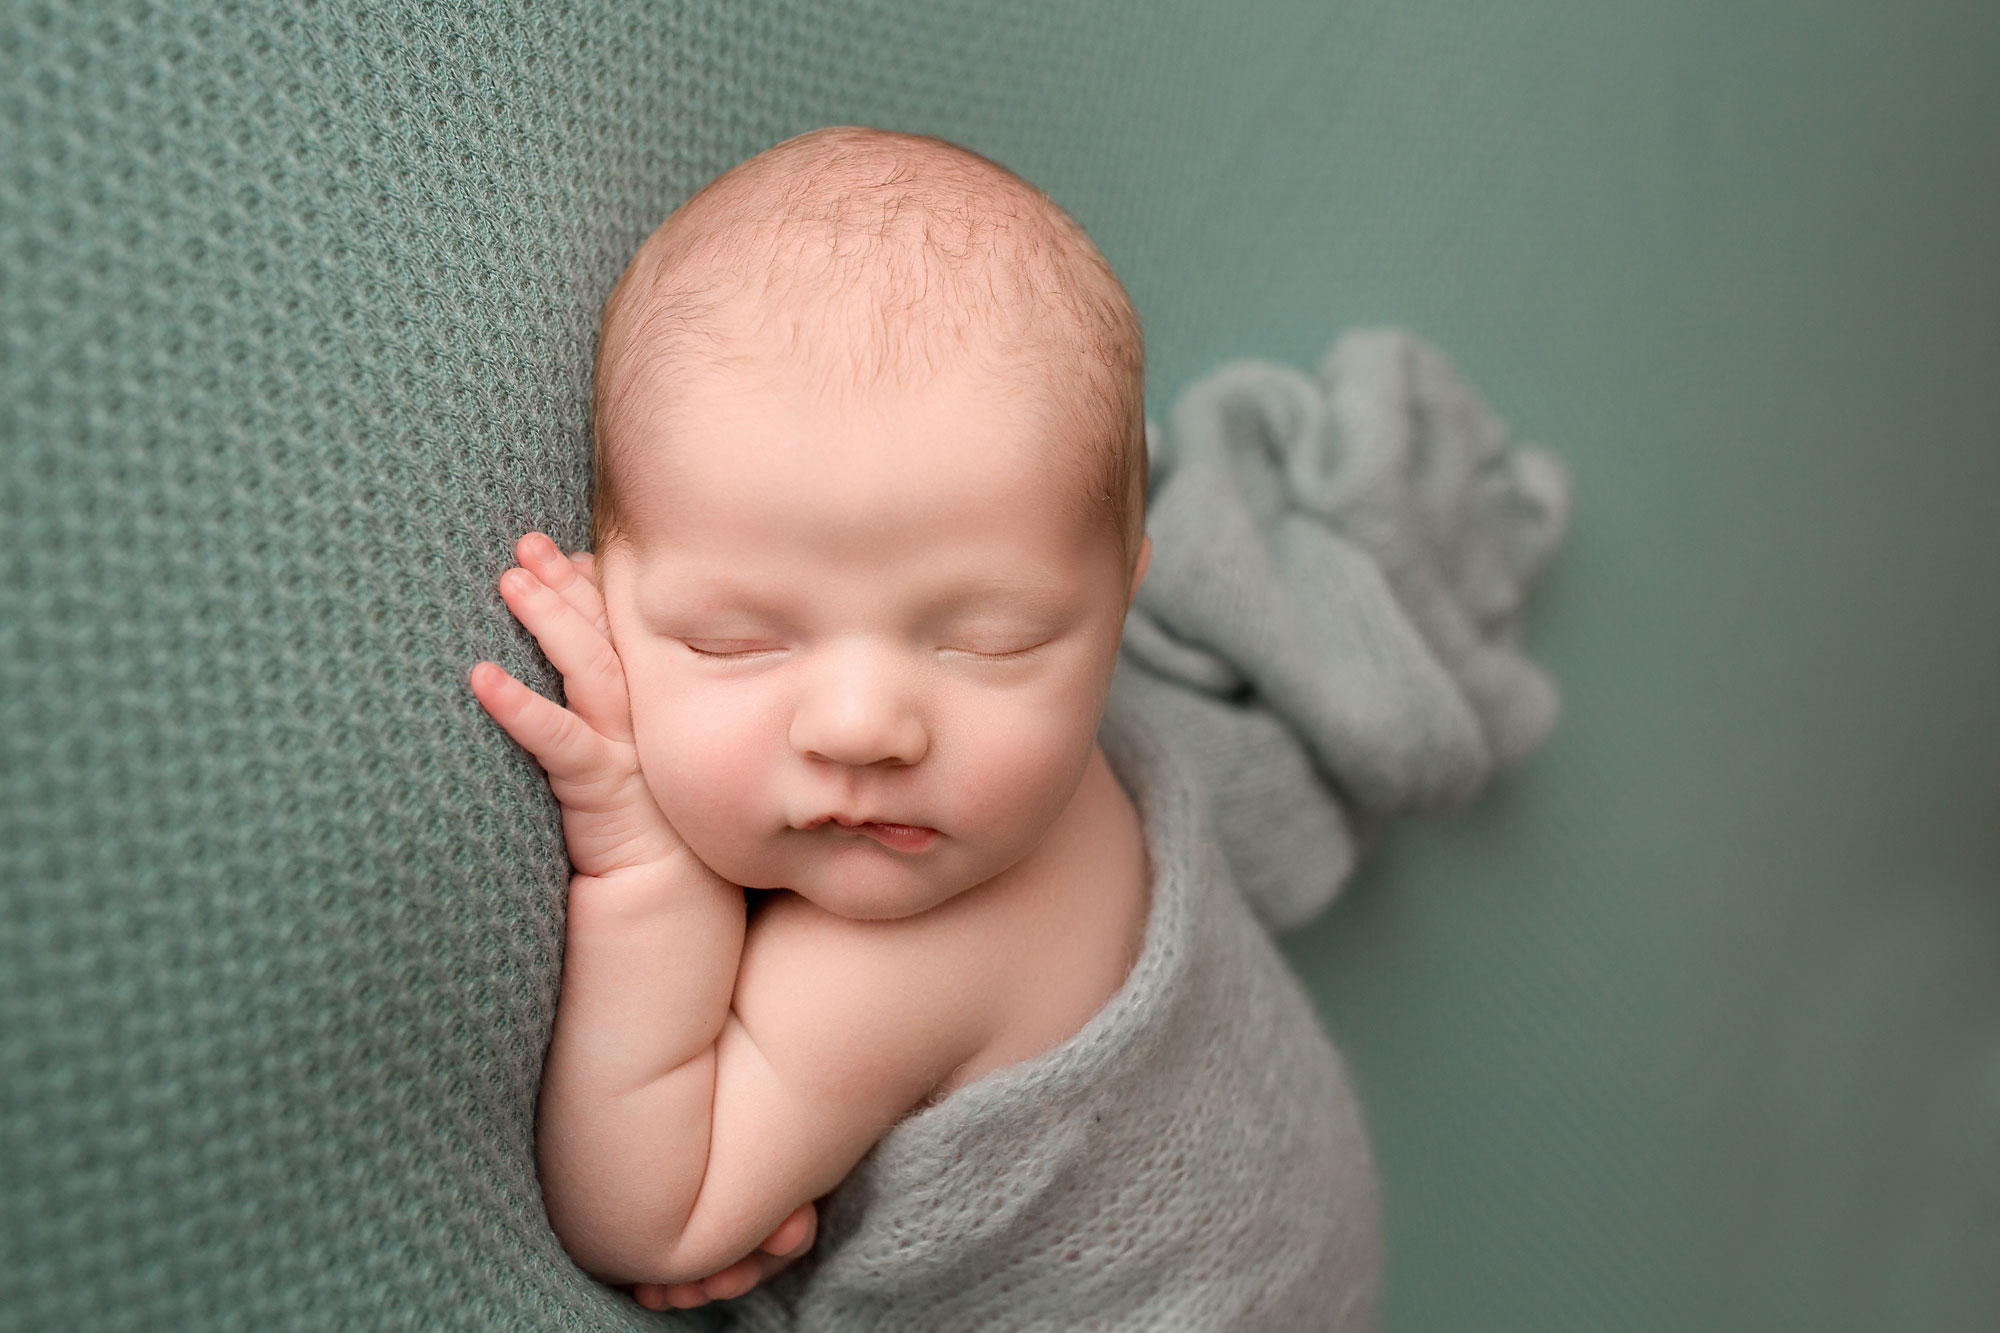 newborn photography session flemington nj, baby boy asleep on teal fabric with soft wrap